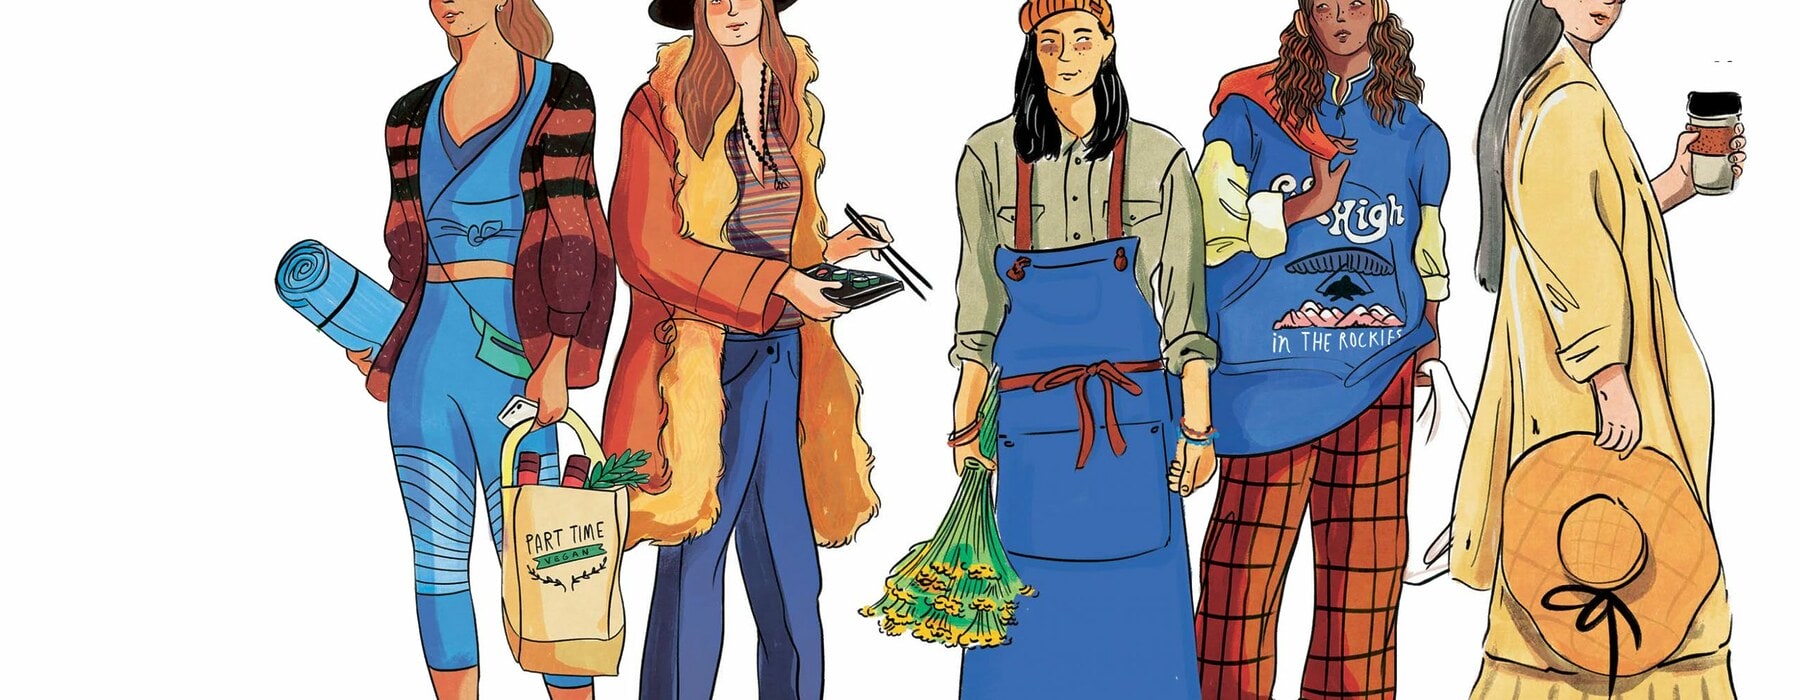 Illustration of hippy women